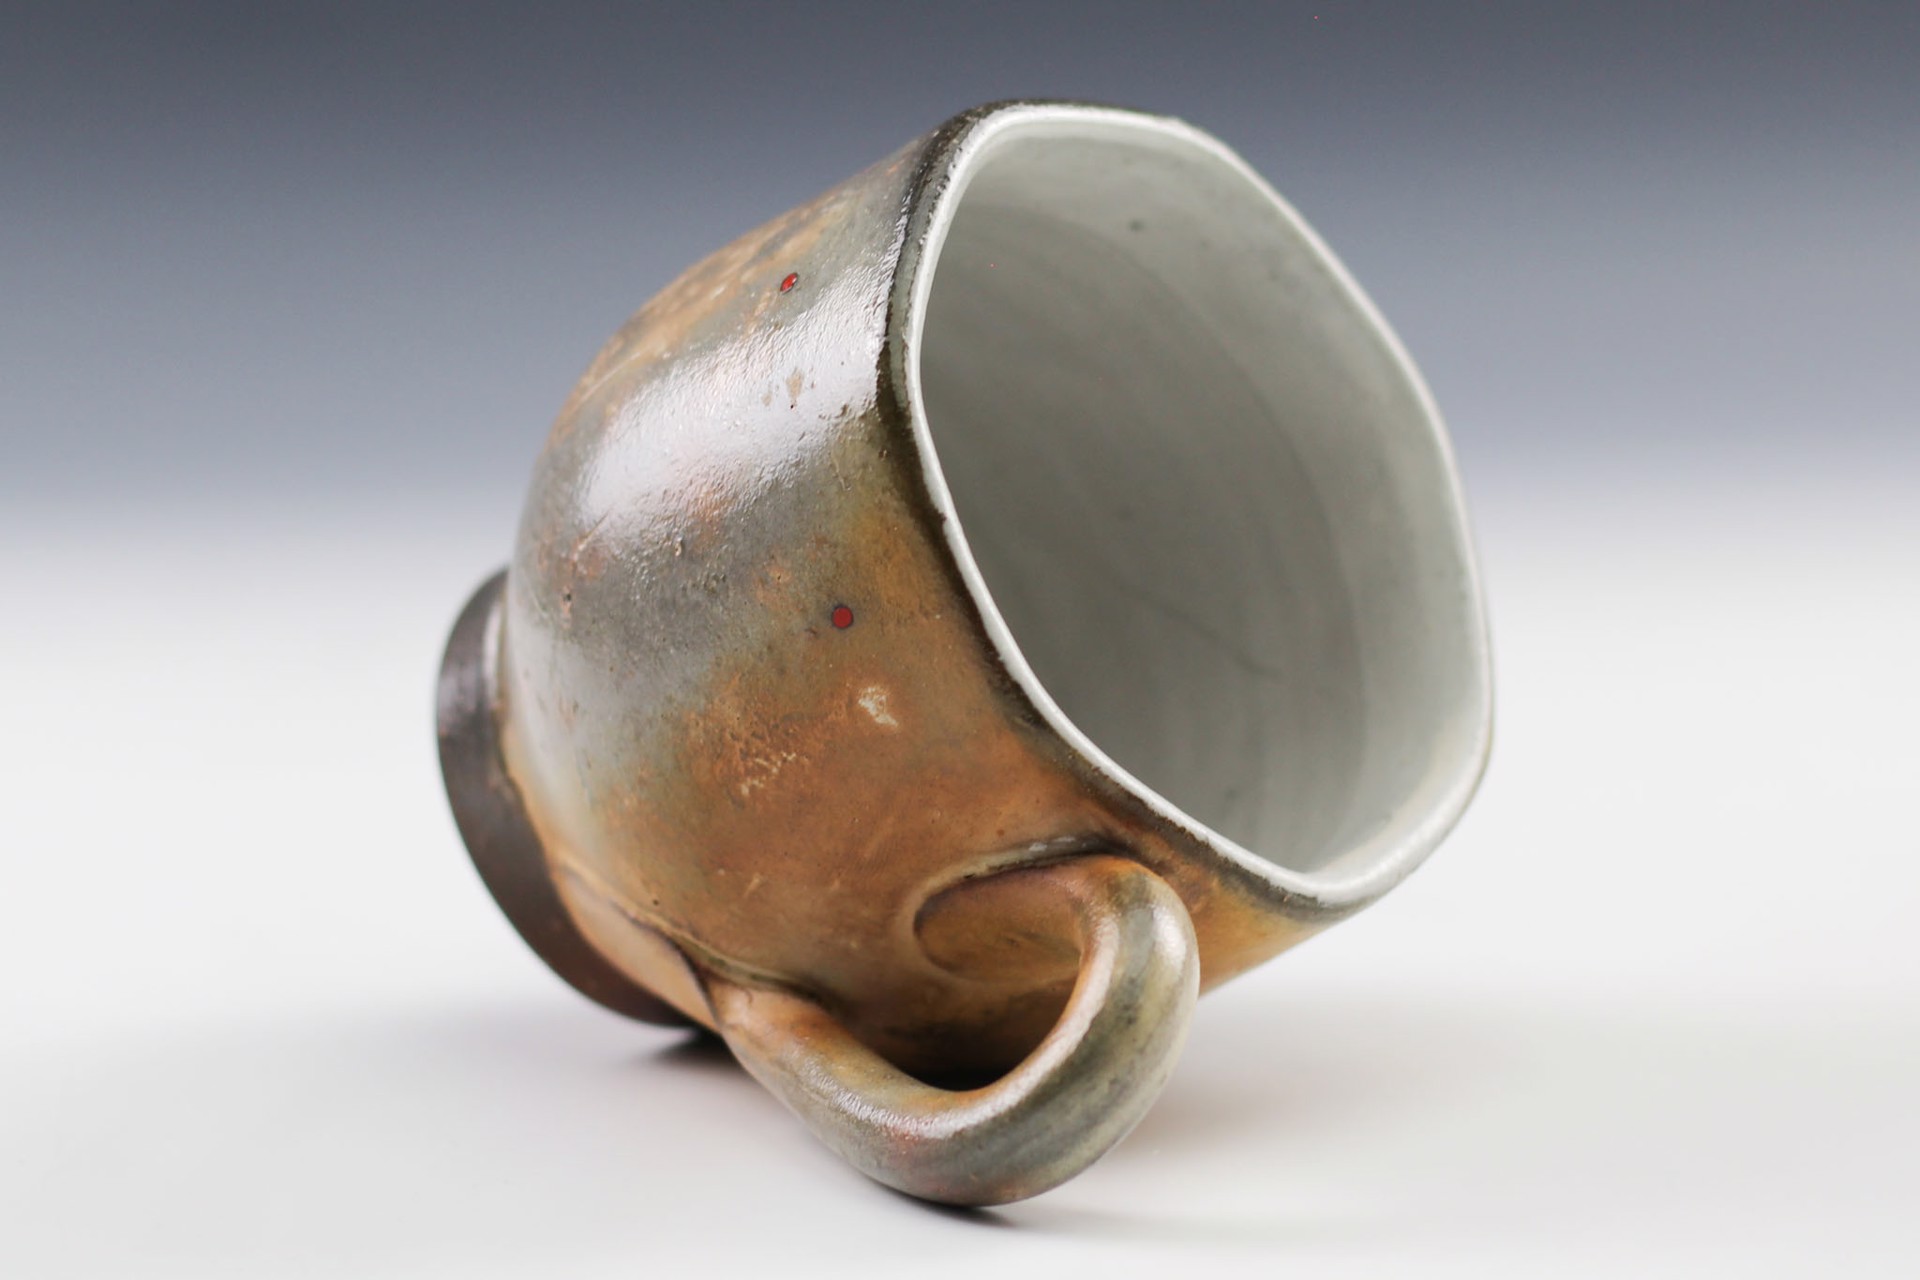 7-Sided Mug by Tom Jaszczak